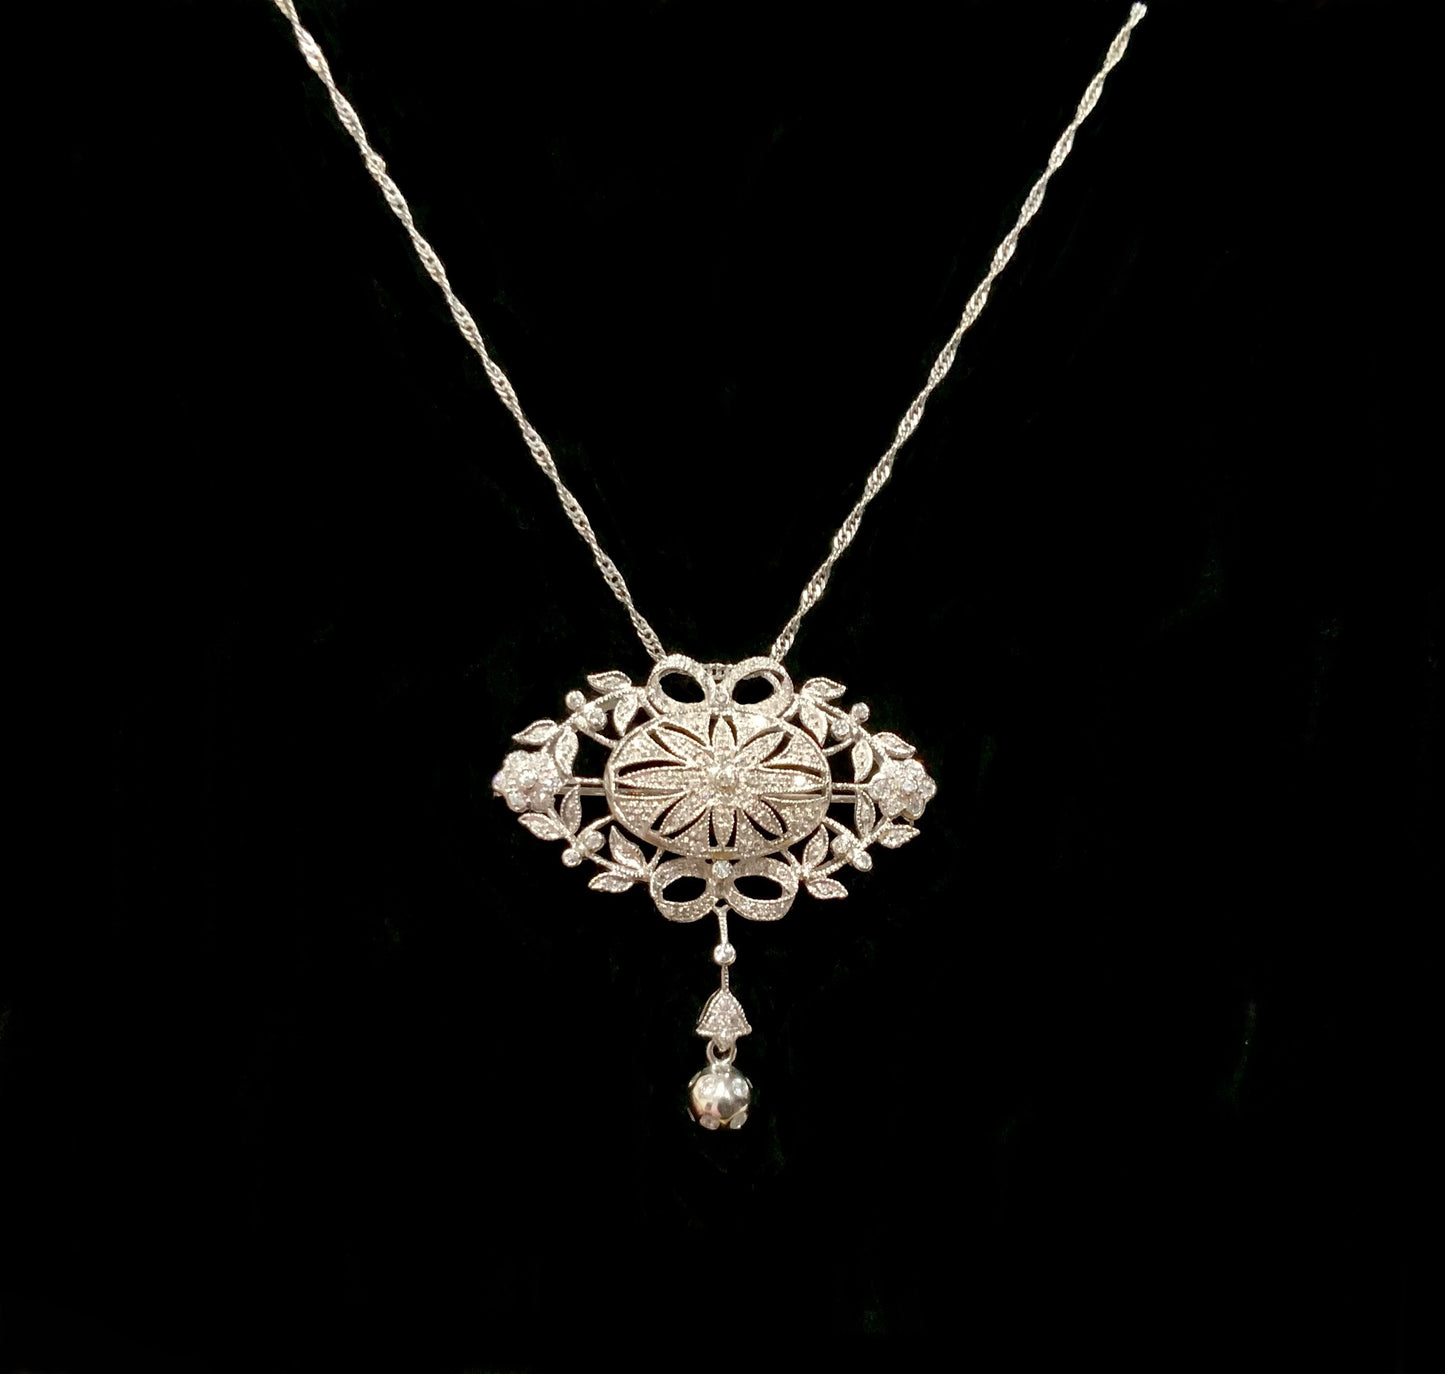 9K White Gold Vintage Belle Epoque Style Brooch / Pendant (Necklace)